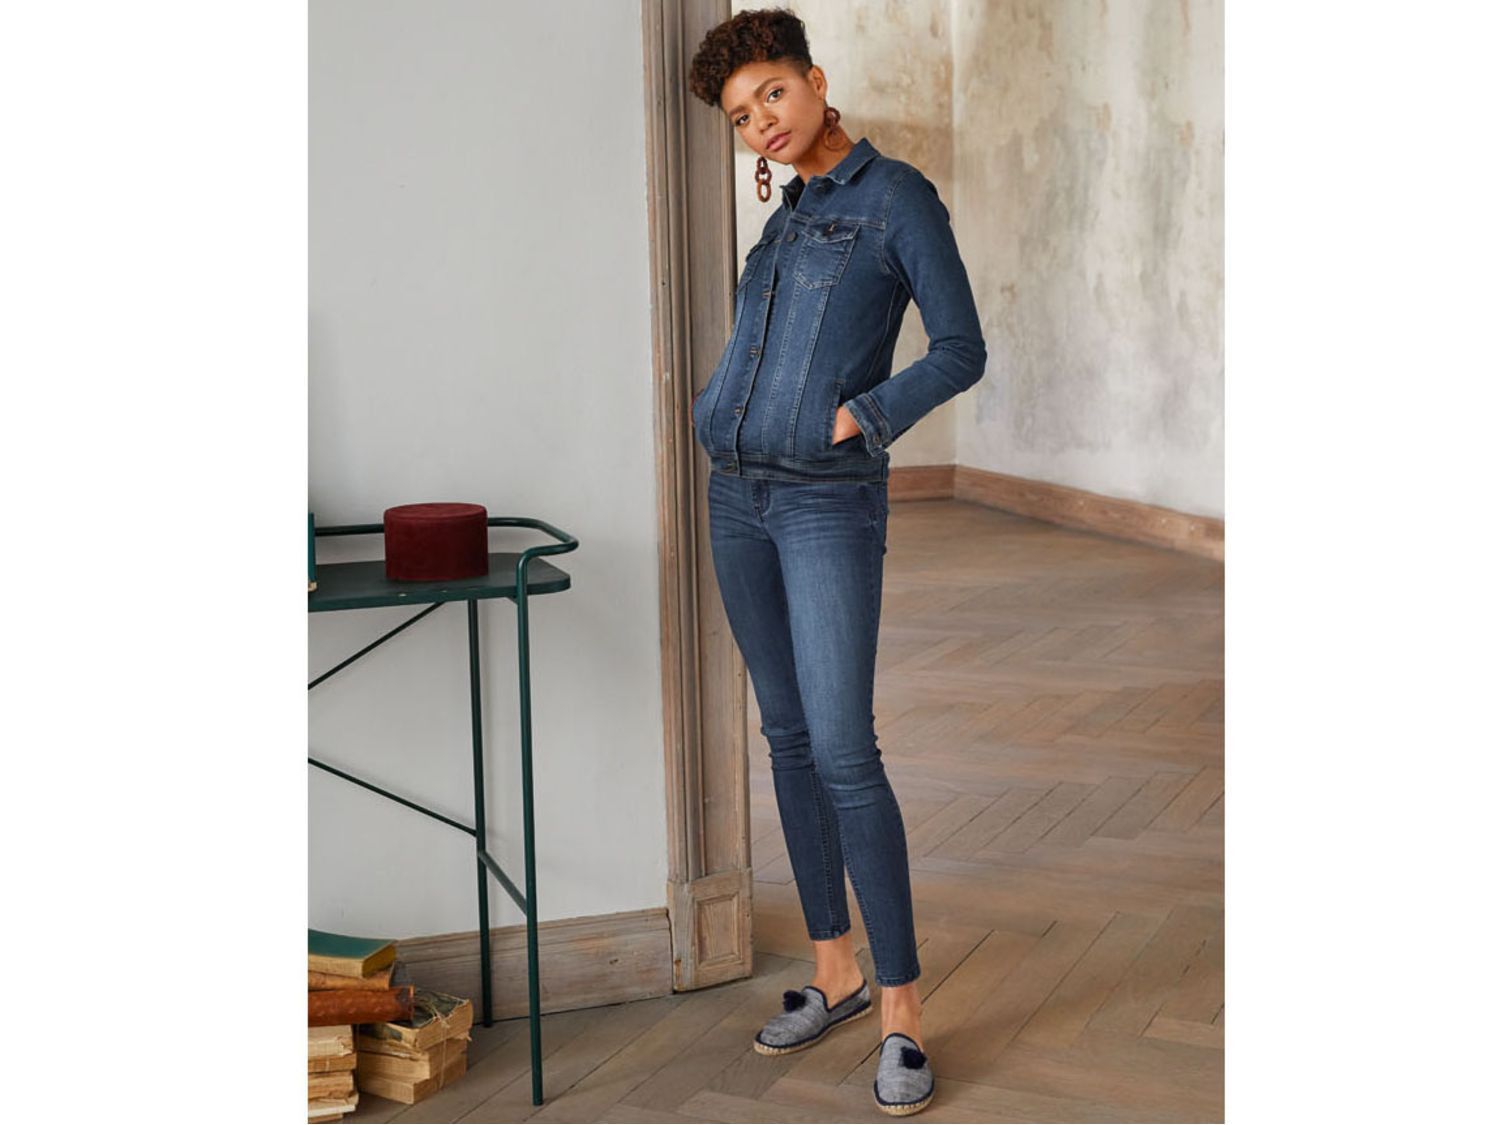 overhandigen Christian Continentaal Dames jeans super skinny fit kopen? | LIDL